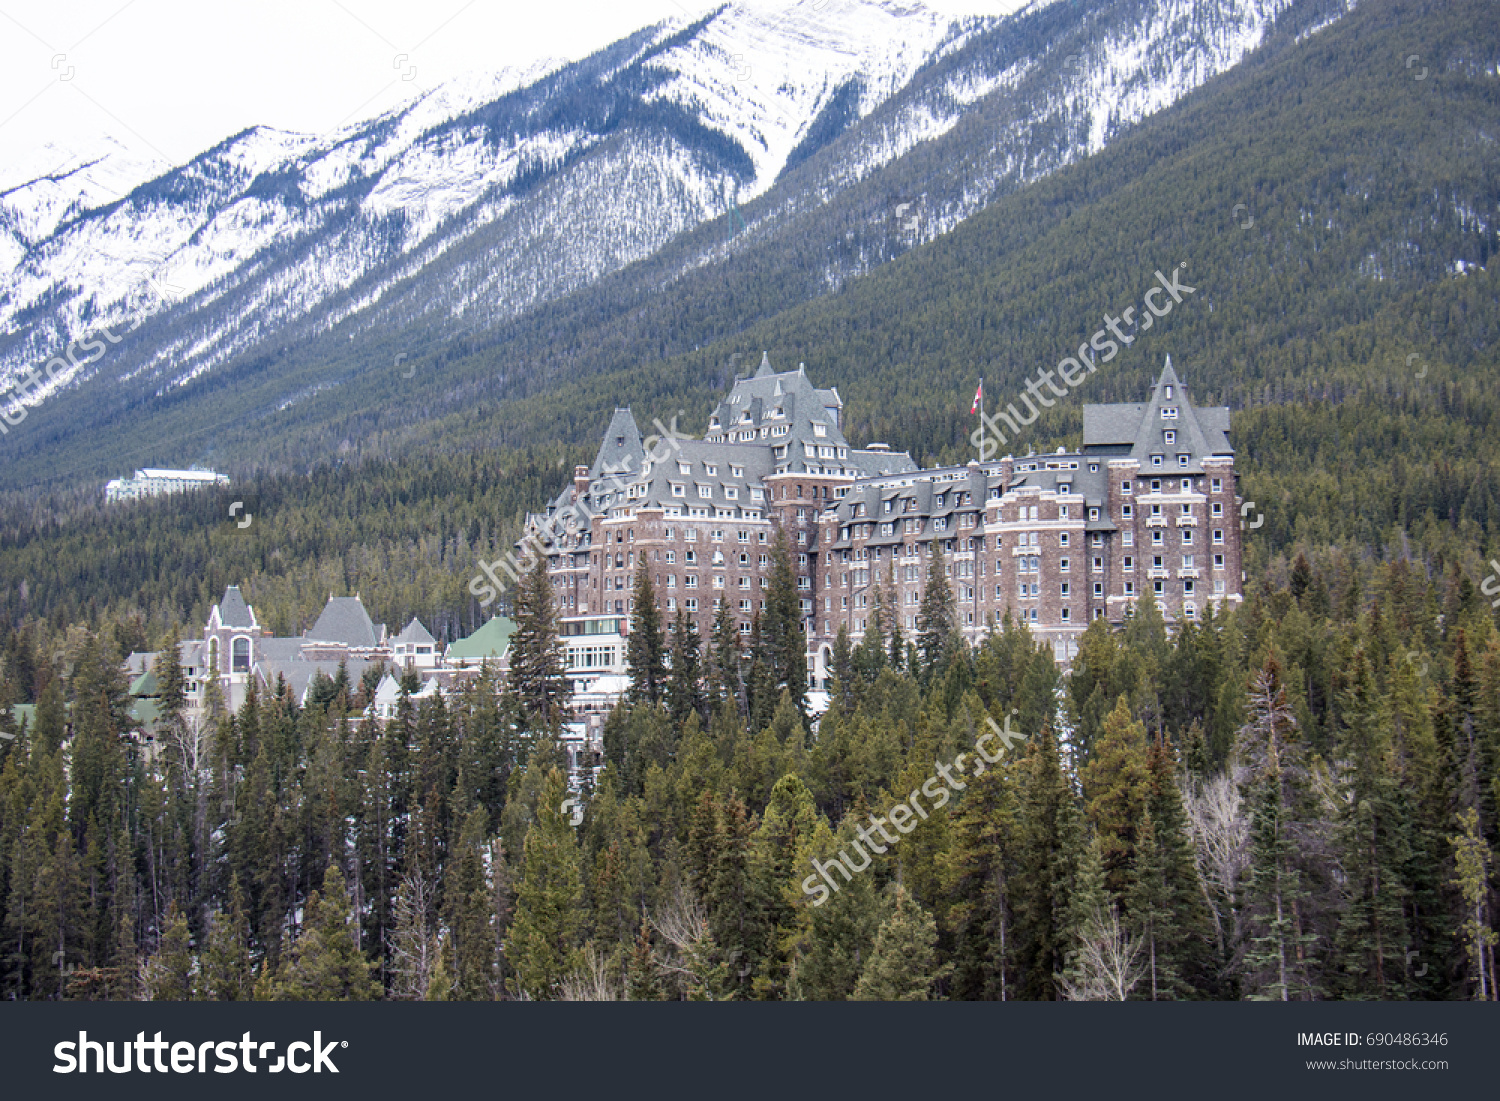 February 16 16 Banff Alberta Canada Buildings Landmarks Stock Image